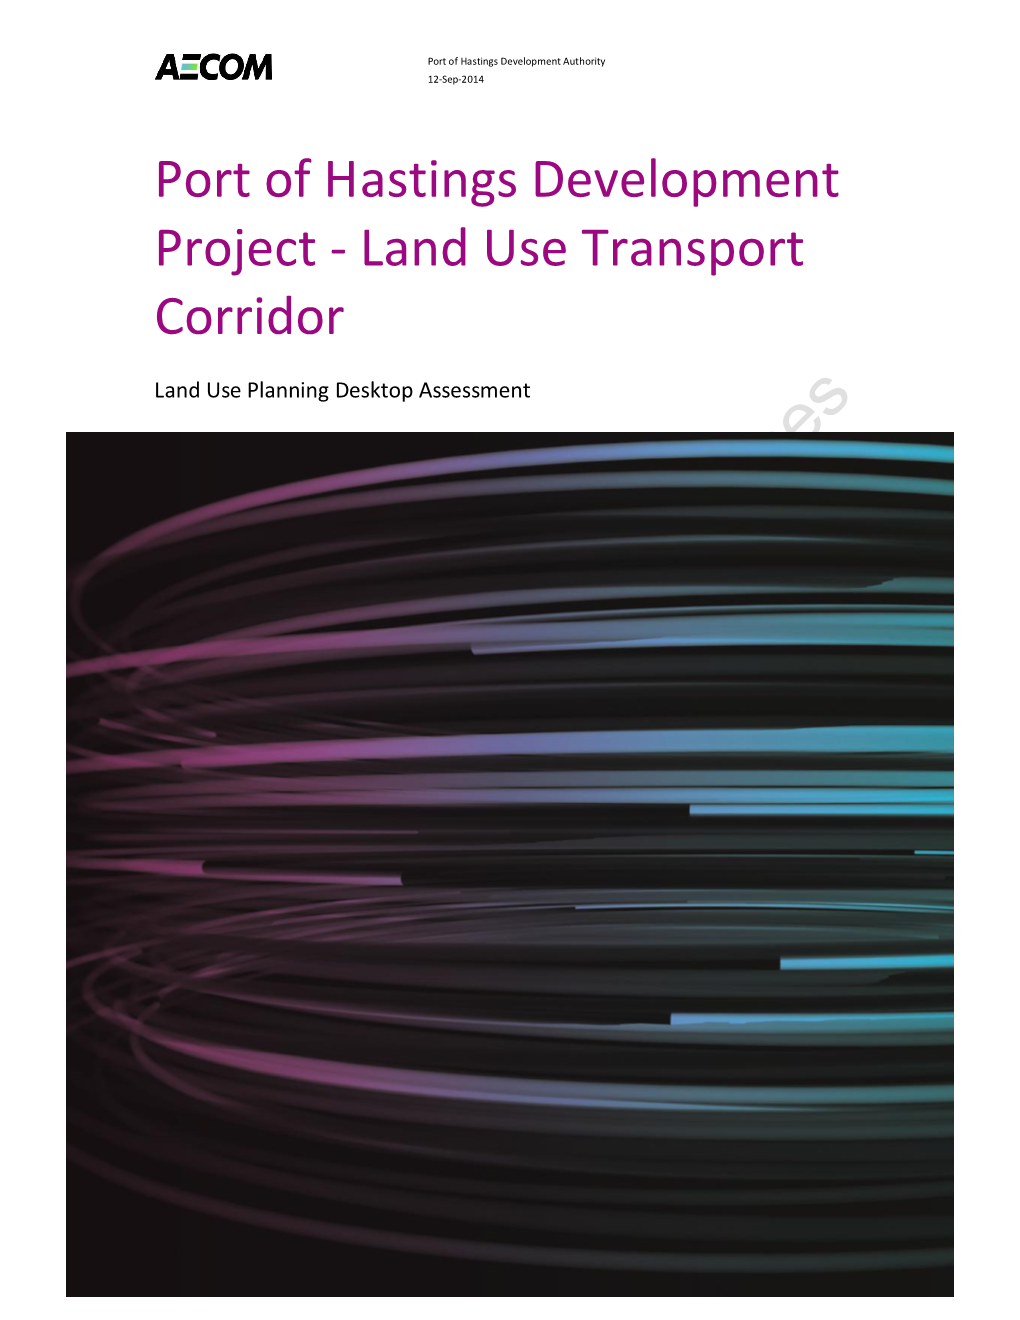 Port of Hastings Development Project - Land Use Transport Corridor